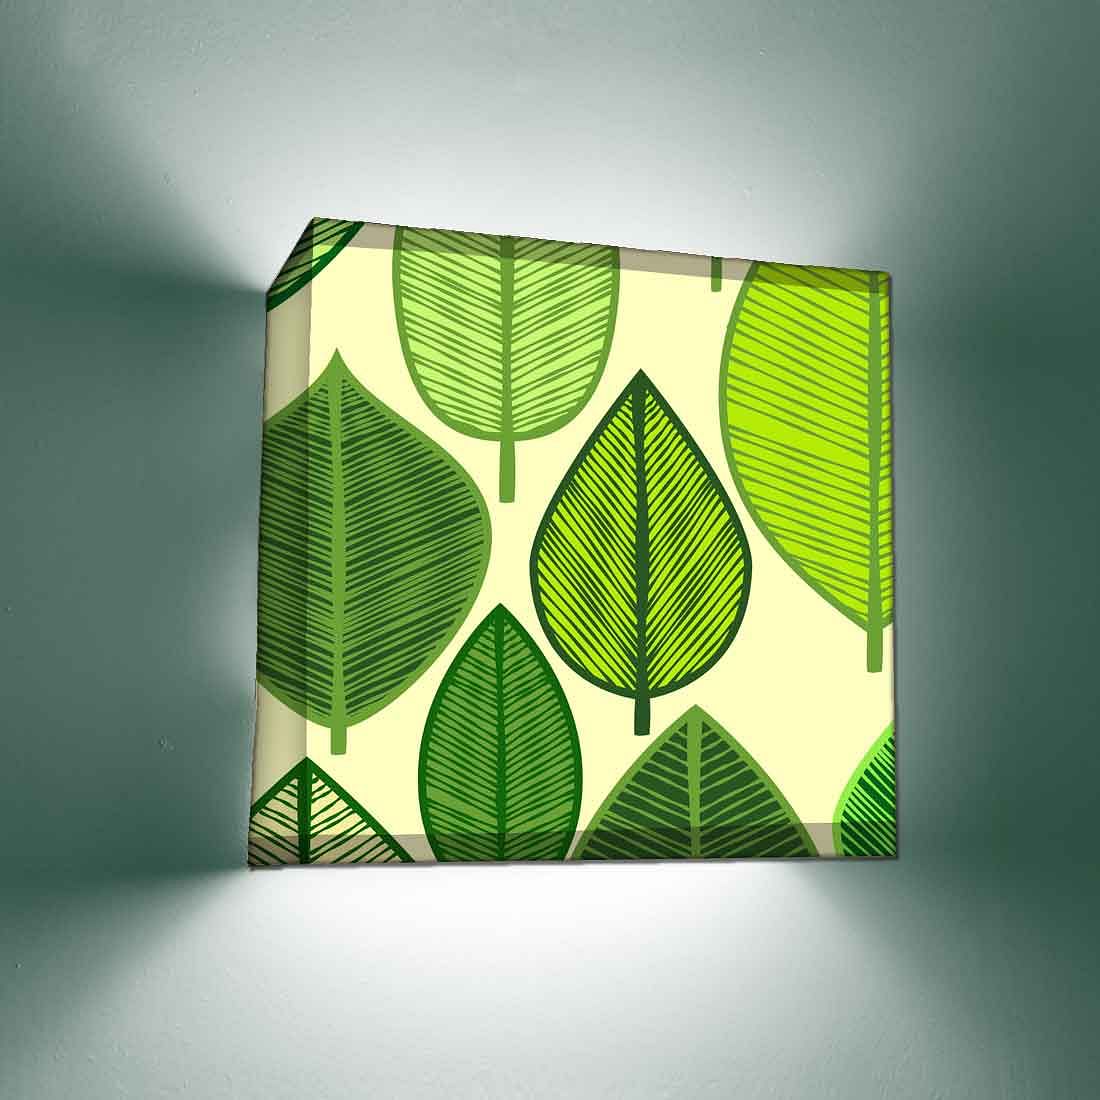 Modern Living Room Wall Lamp - Green Leaves Nutcase